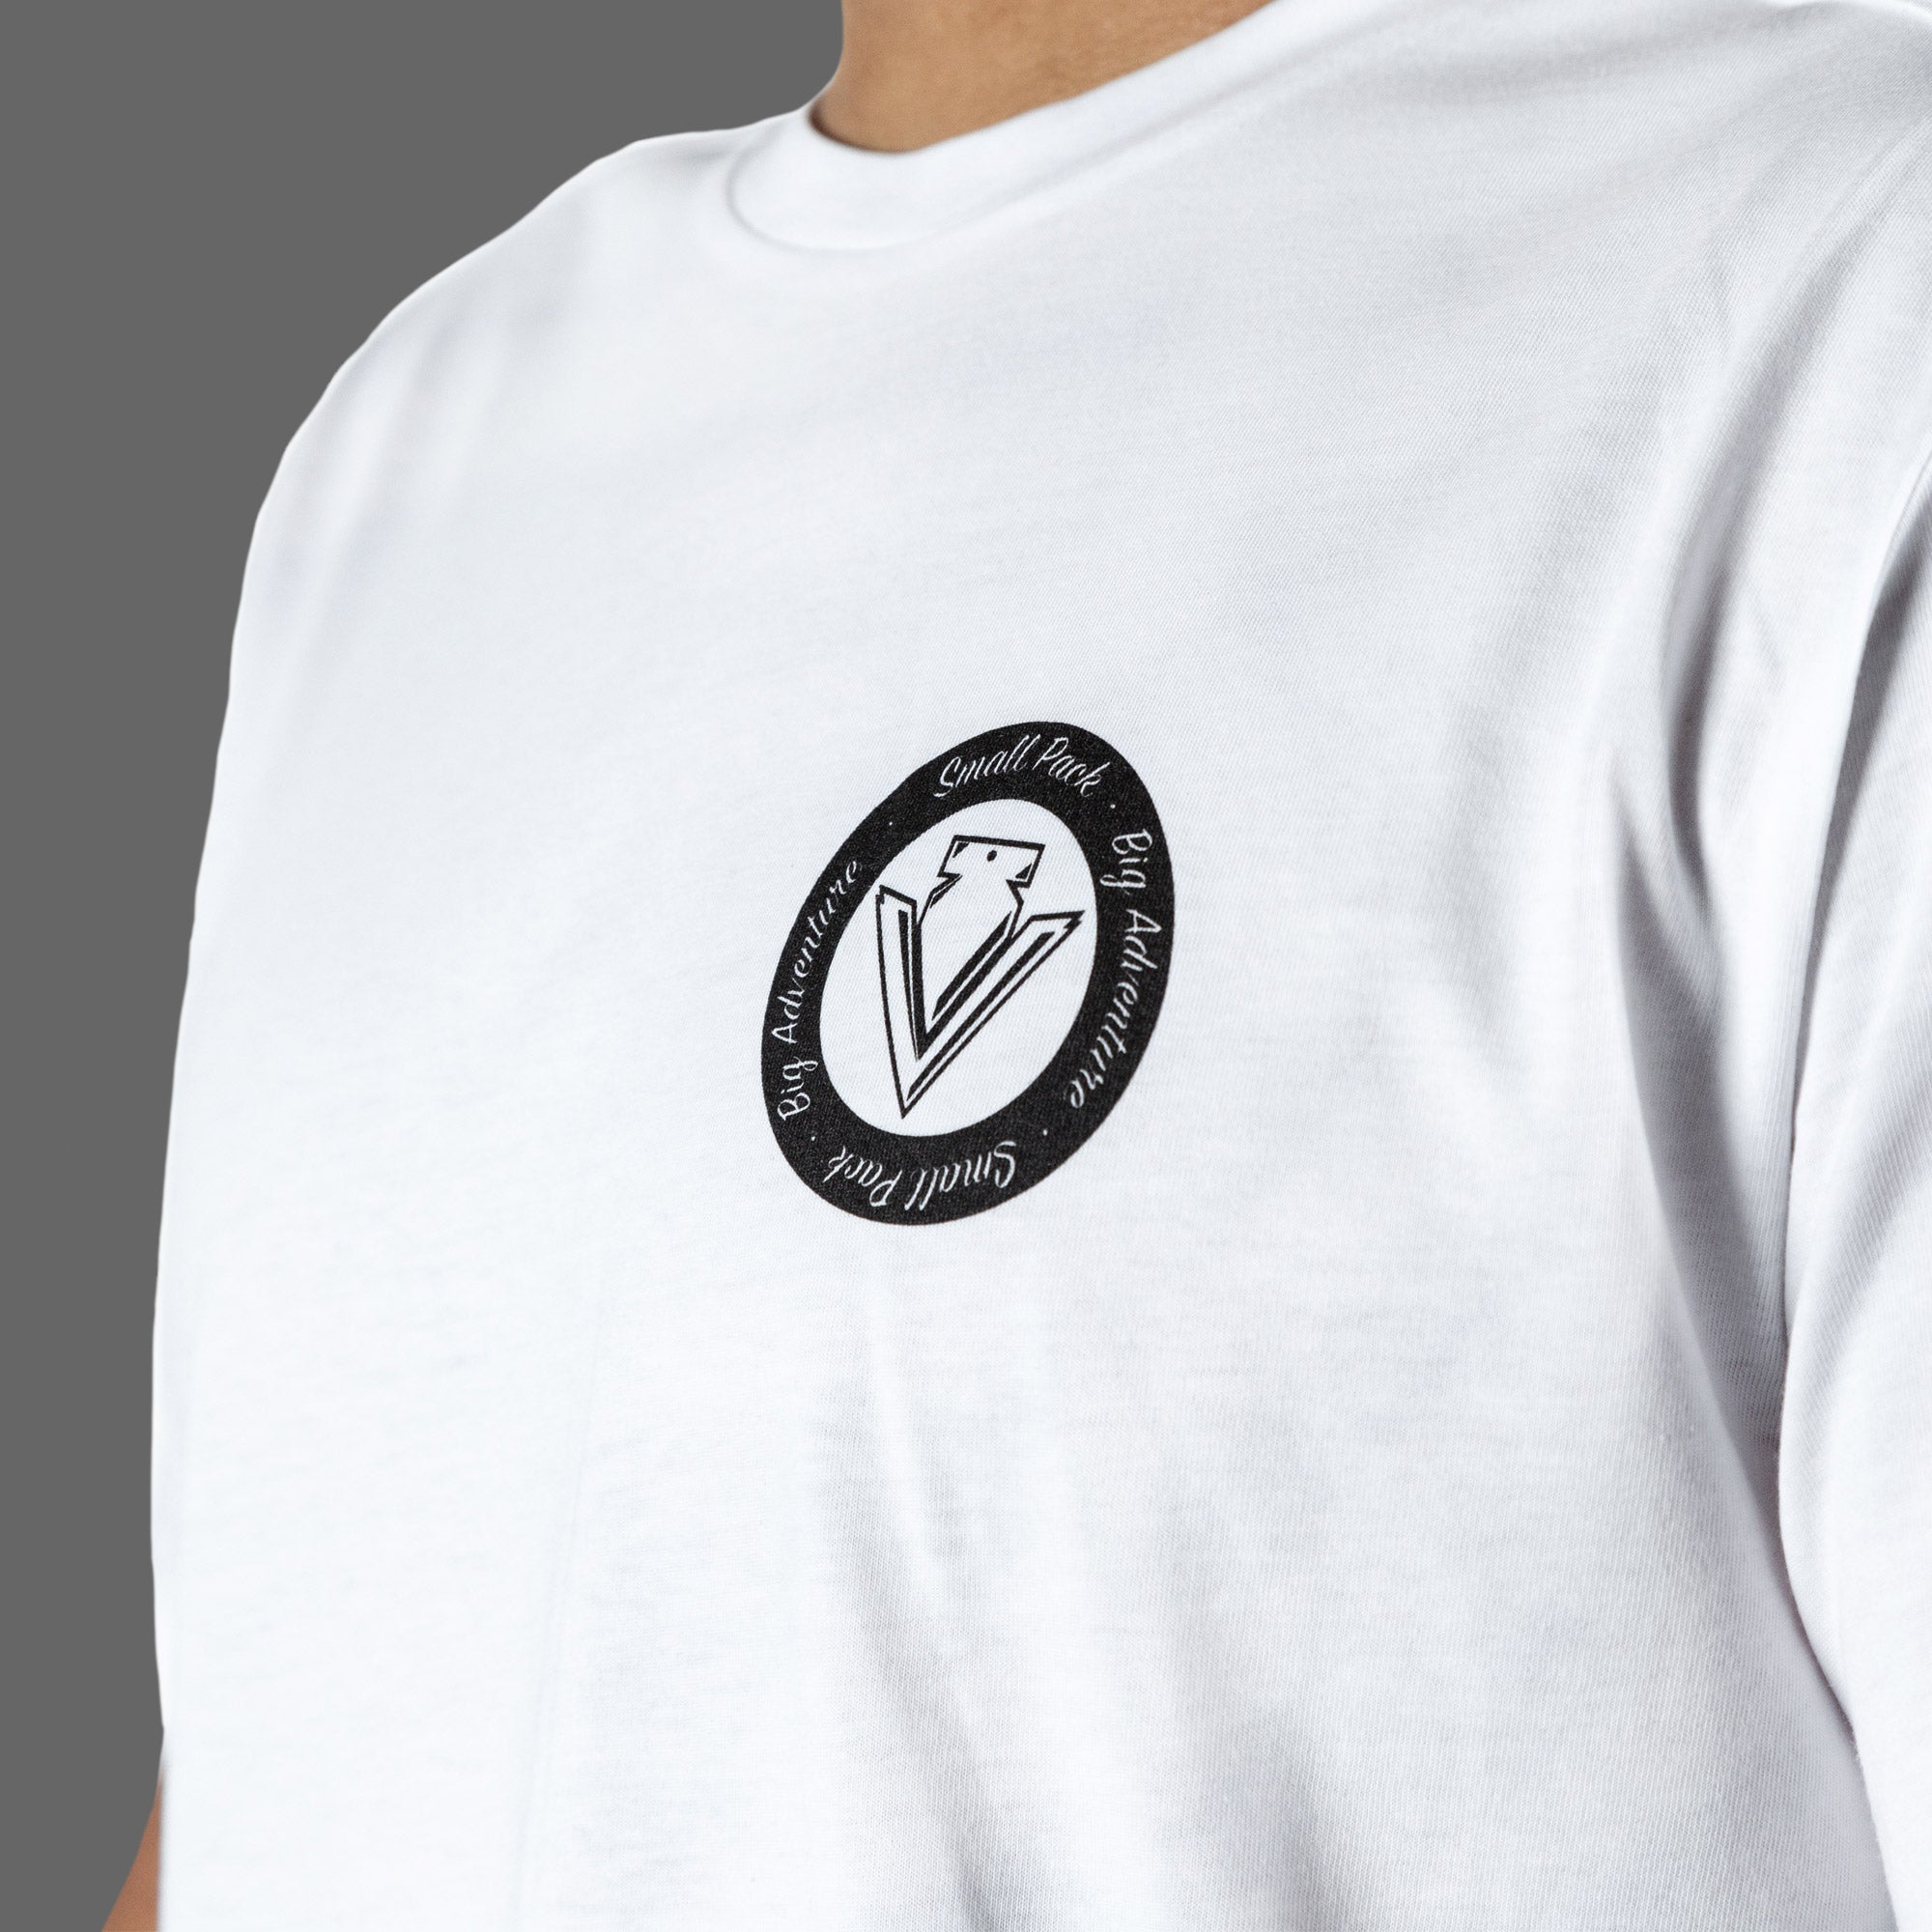 Vital 4U® Signature T-Shirt by NewEra® - Men's